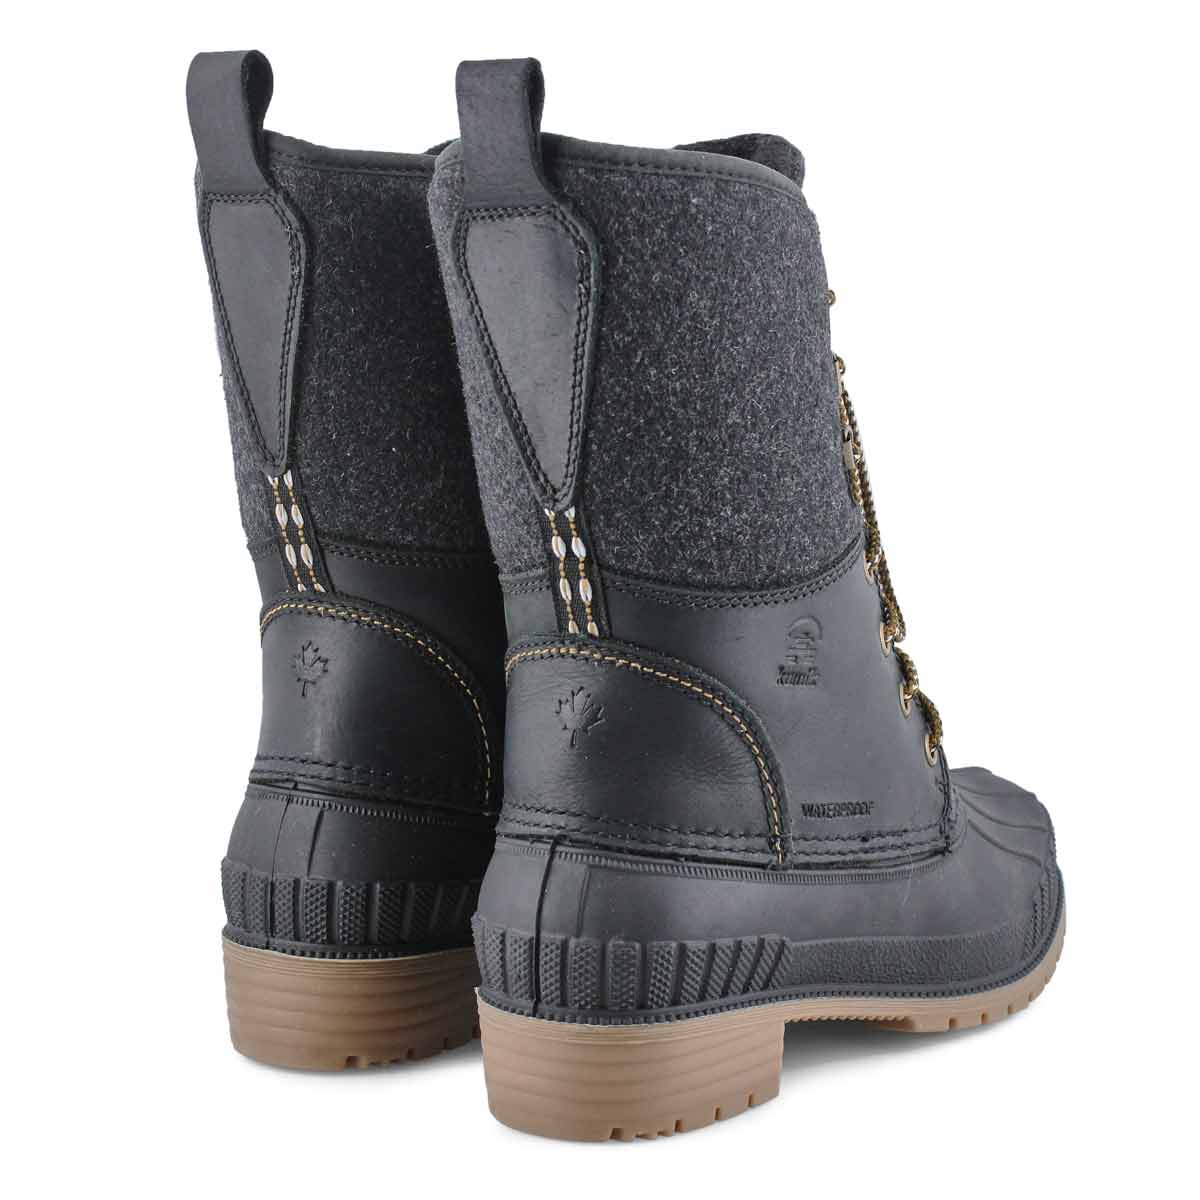 Women's Sienna 2 Waterproof Winter Boot - Black